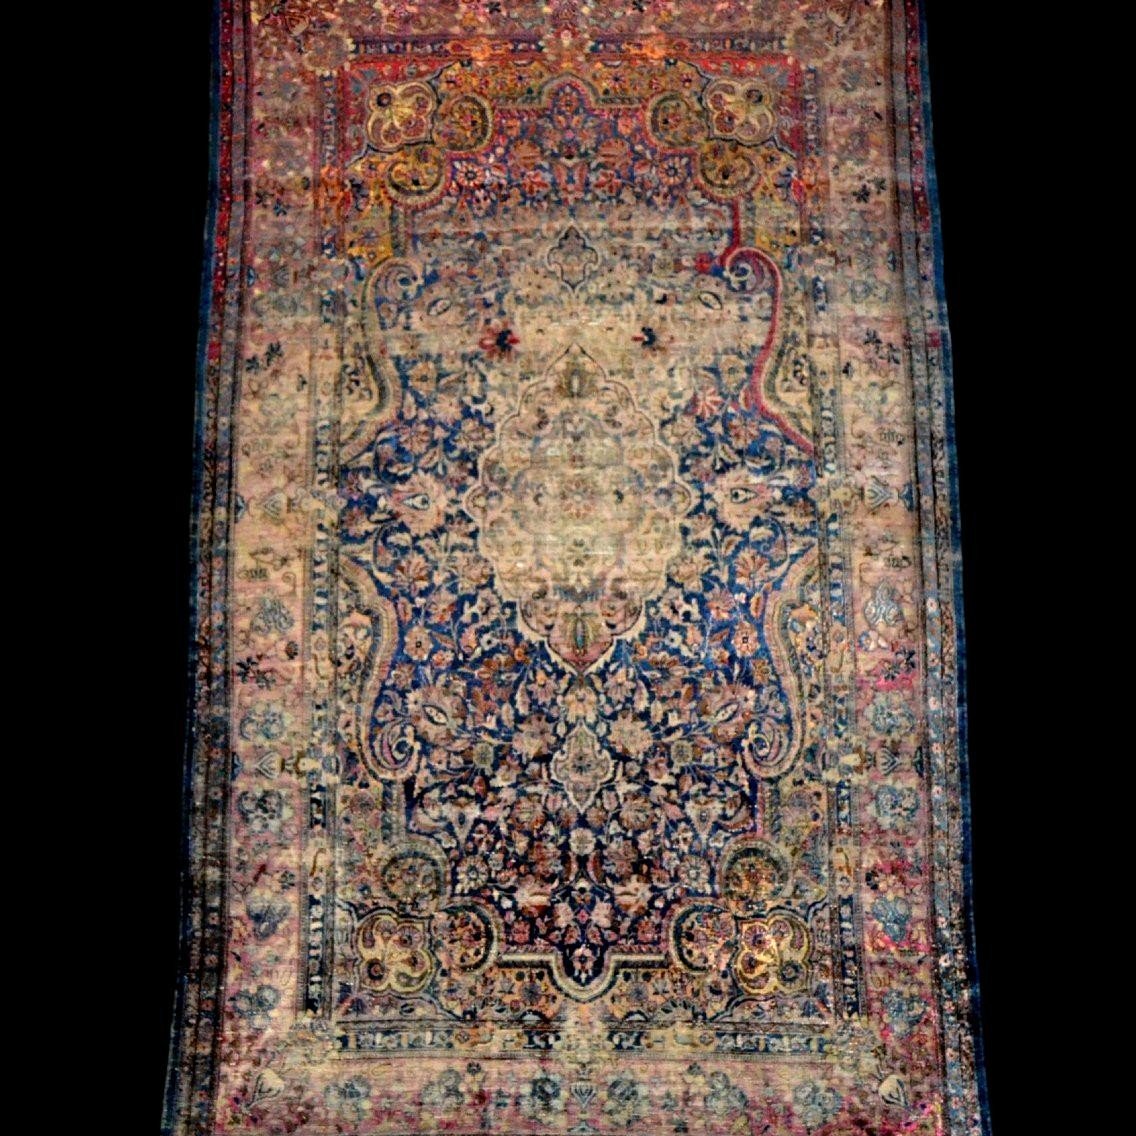 Ancient Kashan In Silk On Silk, 126 X 208 Cm, Hand Knotted, Persia, Kadjar Dynasty, 19th Century